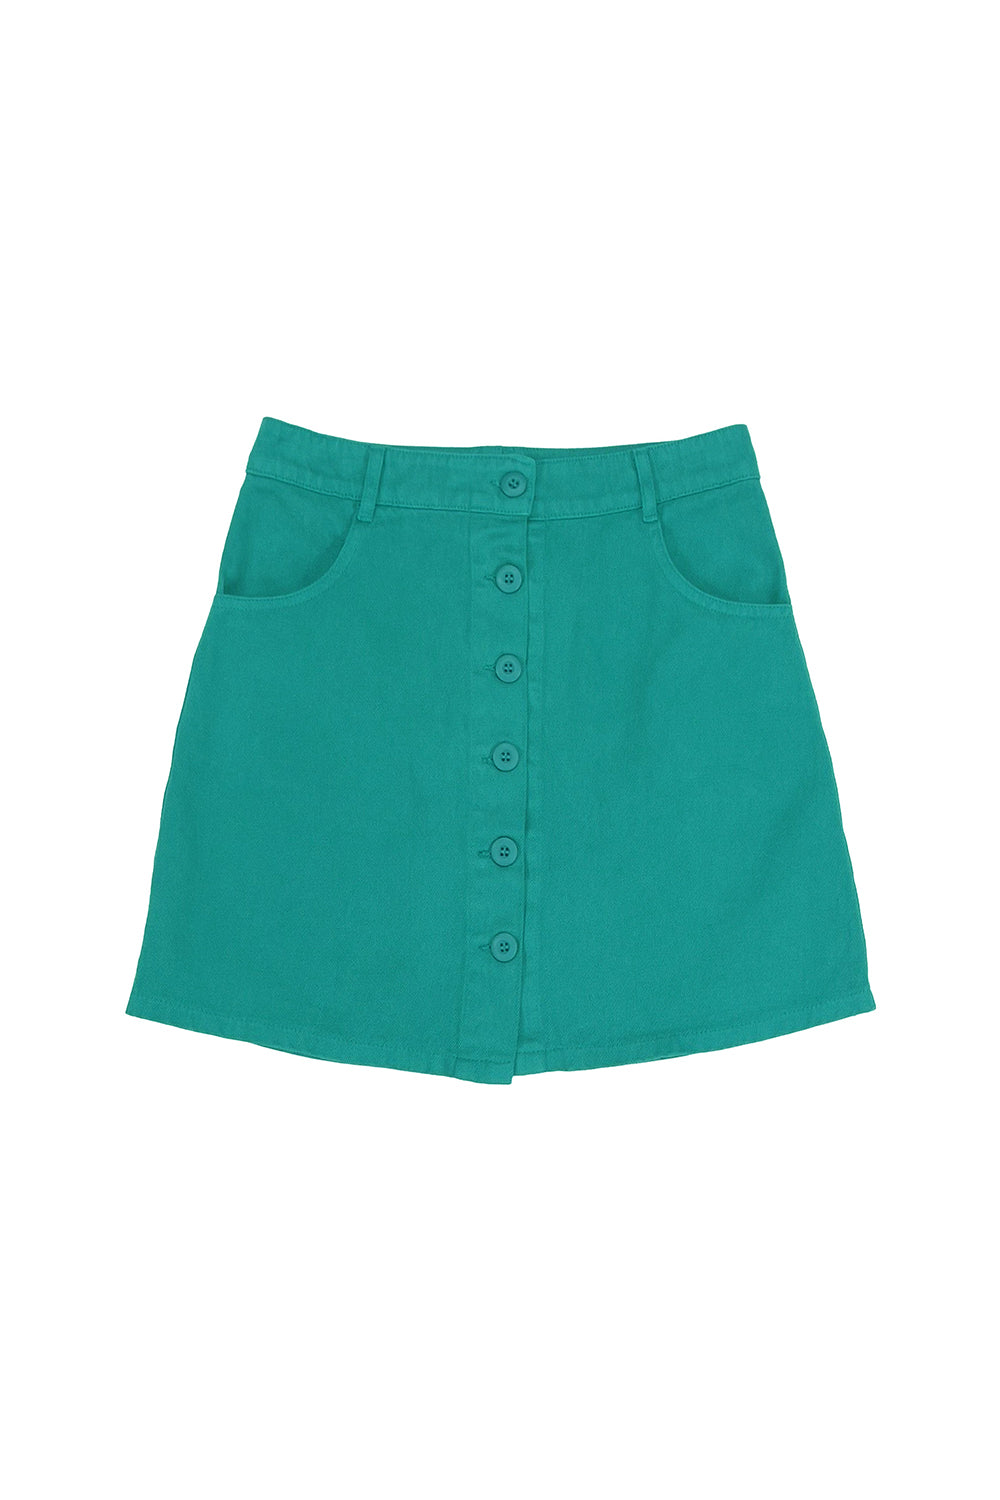 Vassar Skirt | Jungmaven Hemp Clothing & Accessories / Color: Ivy Green